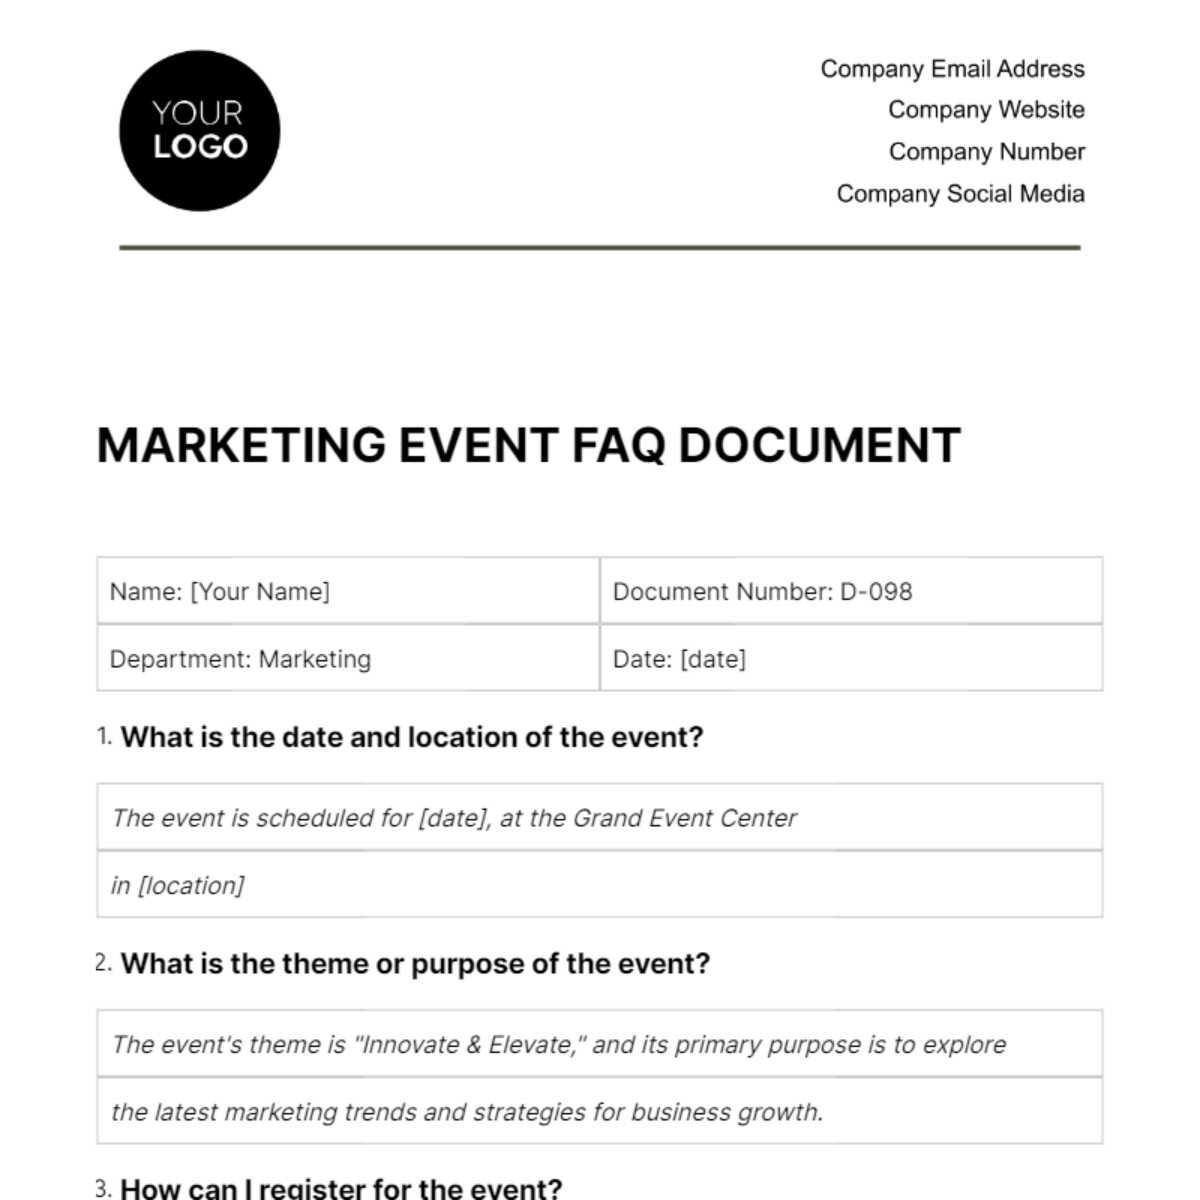 Marketing Event FAQ Document Template